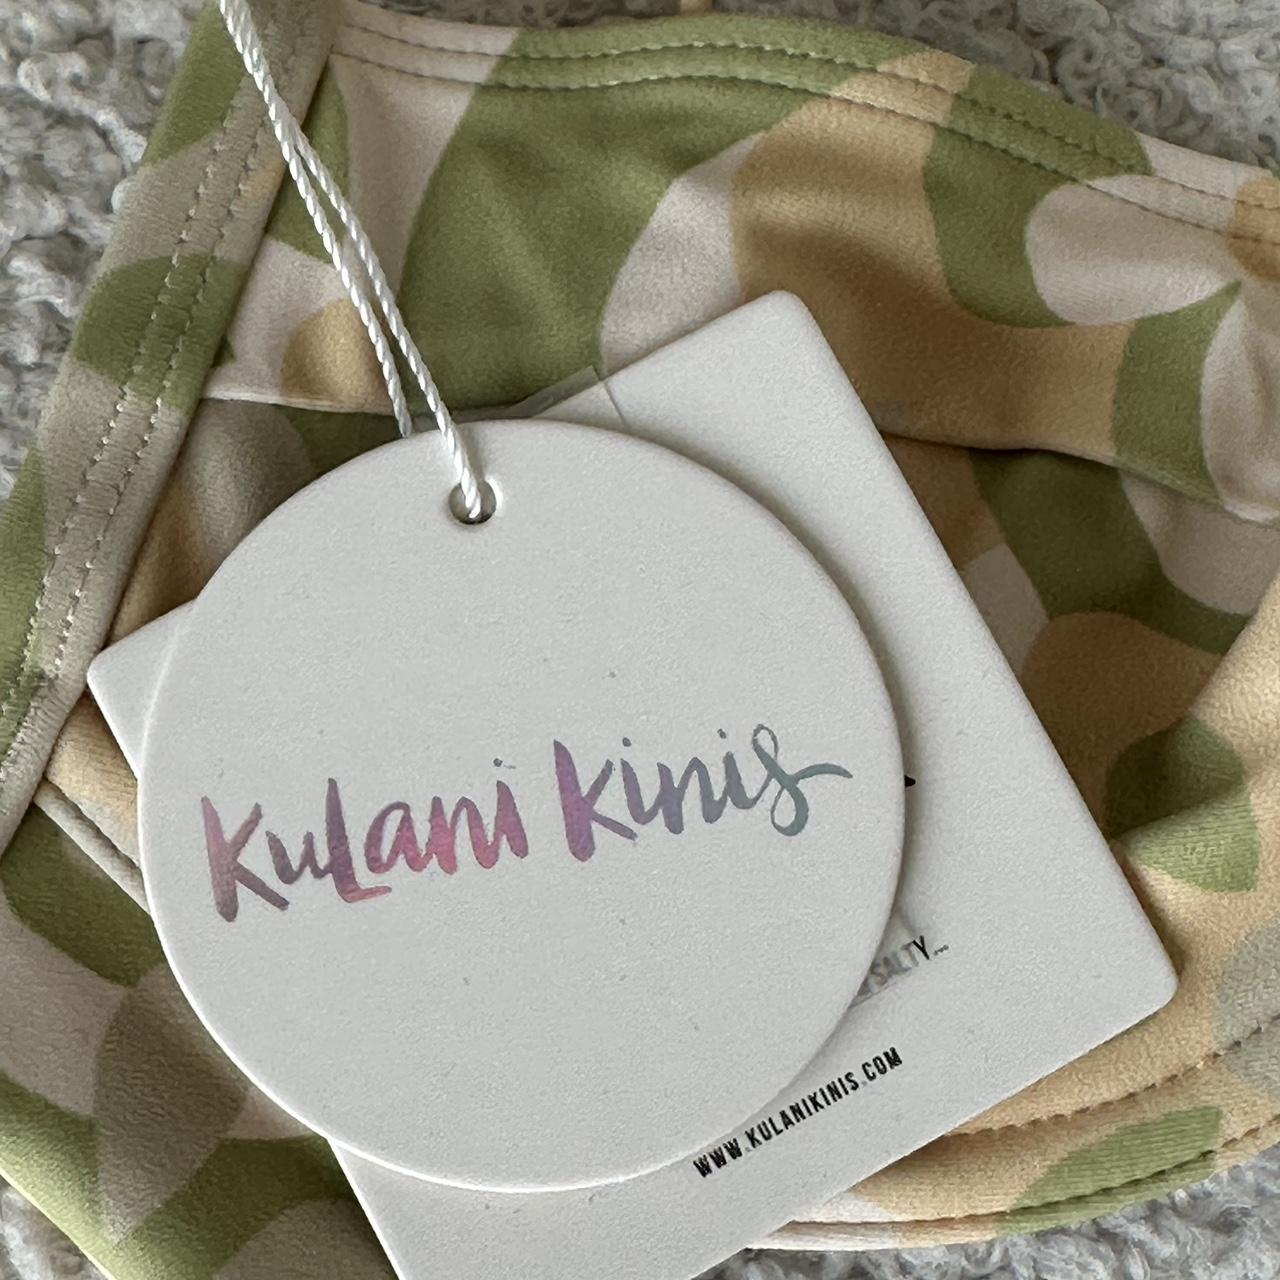 Kulani Kinis Women's Green and Cream Bikini-and-tankini-tops (2)